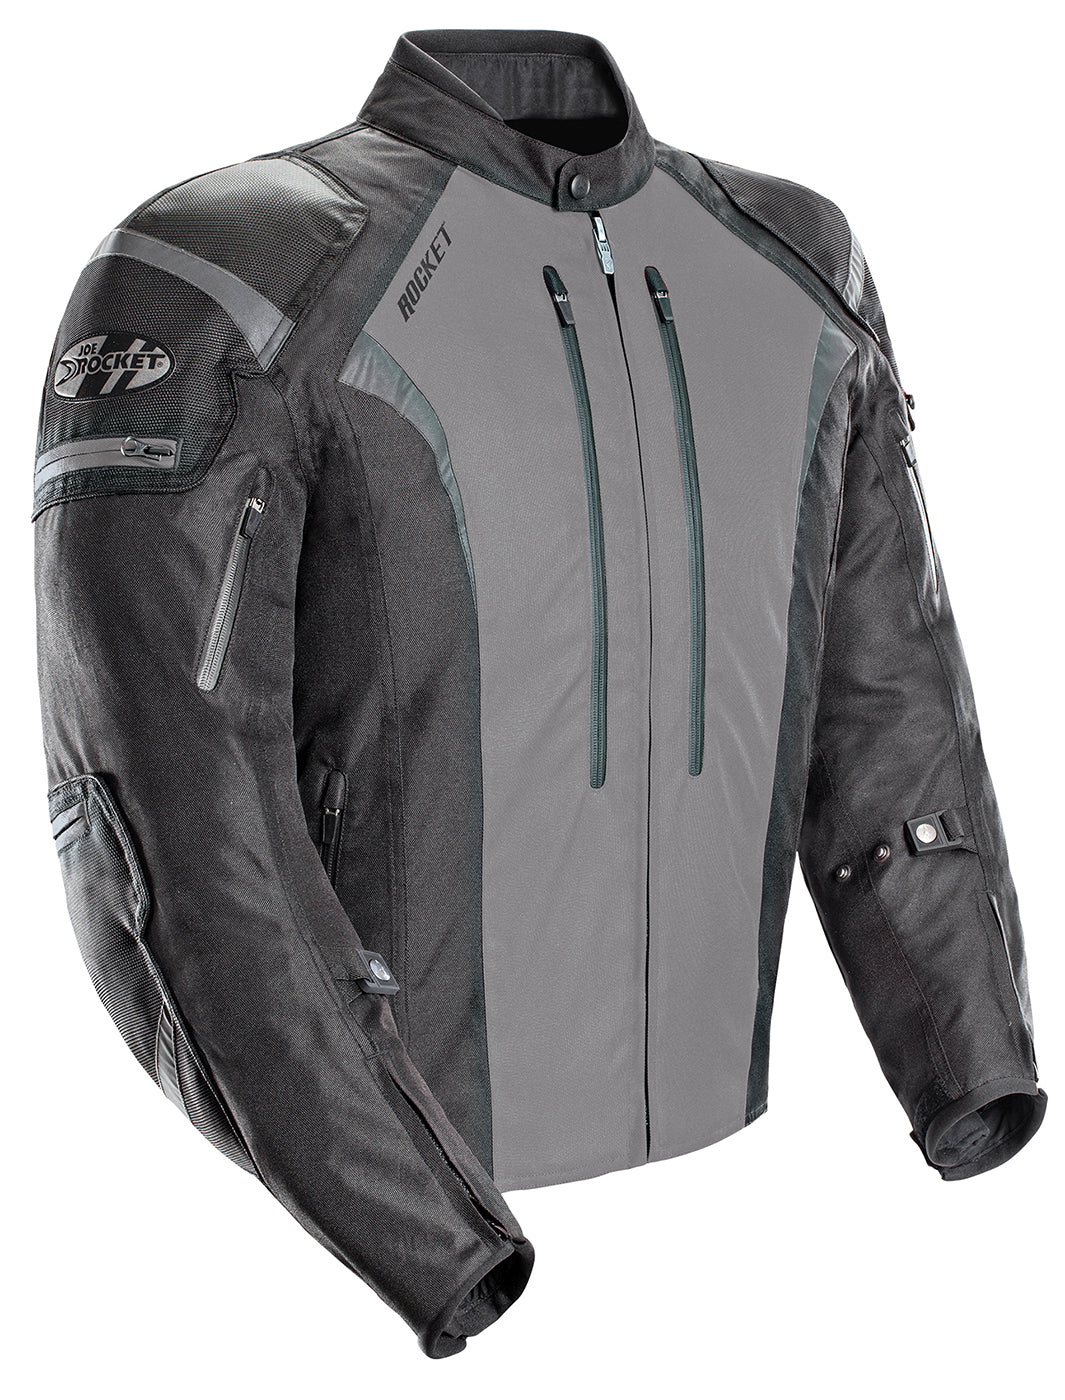 Joe Rocket Atomic 5.0 Textile Jacket - Black/Grey